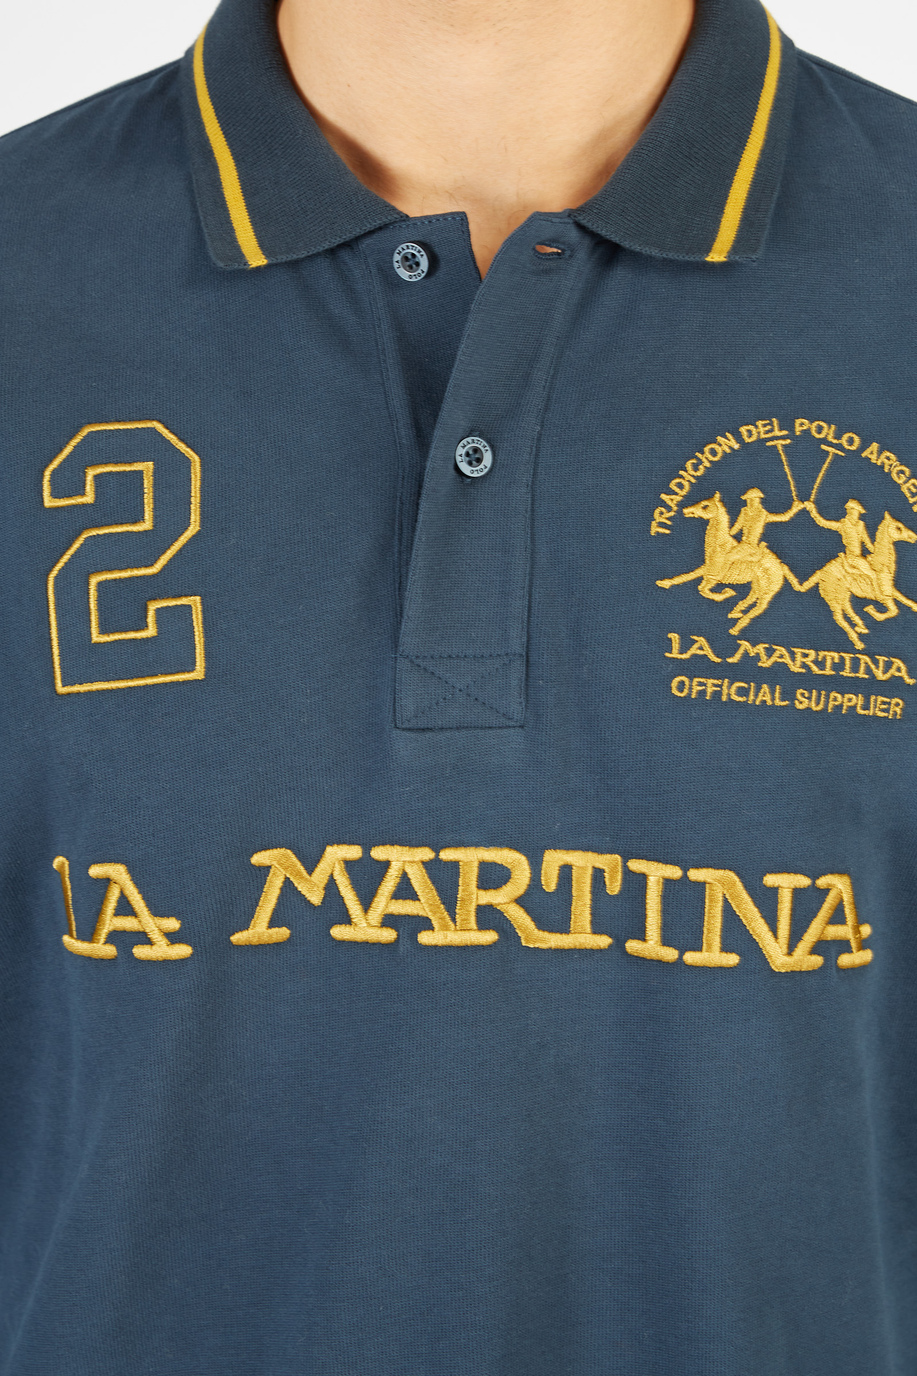 Herren-Poloshirt aus Baumwolle mit langen Ärmeln - Best Seller | La Martina - Official Online Shop